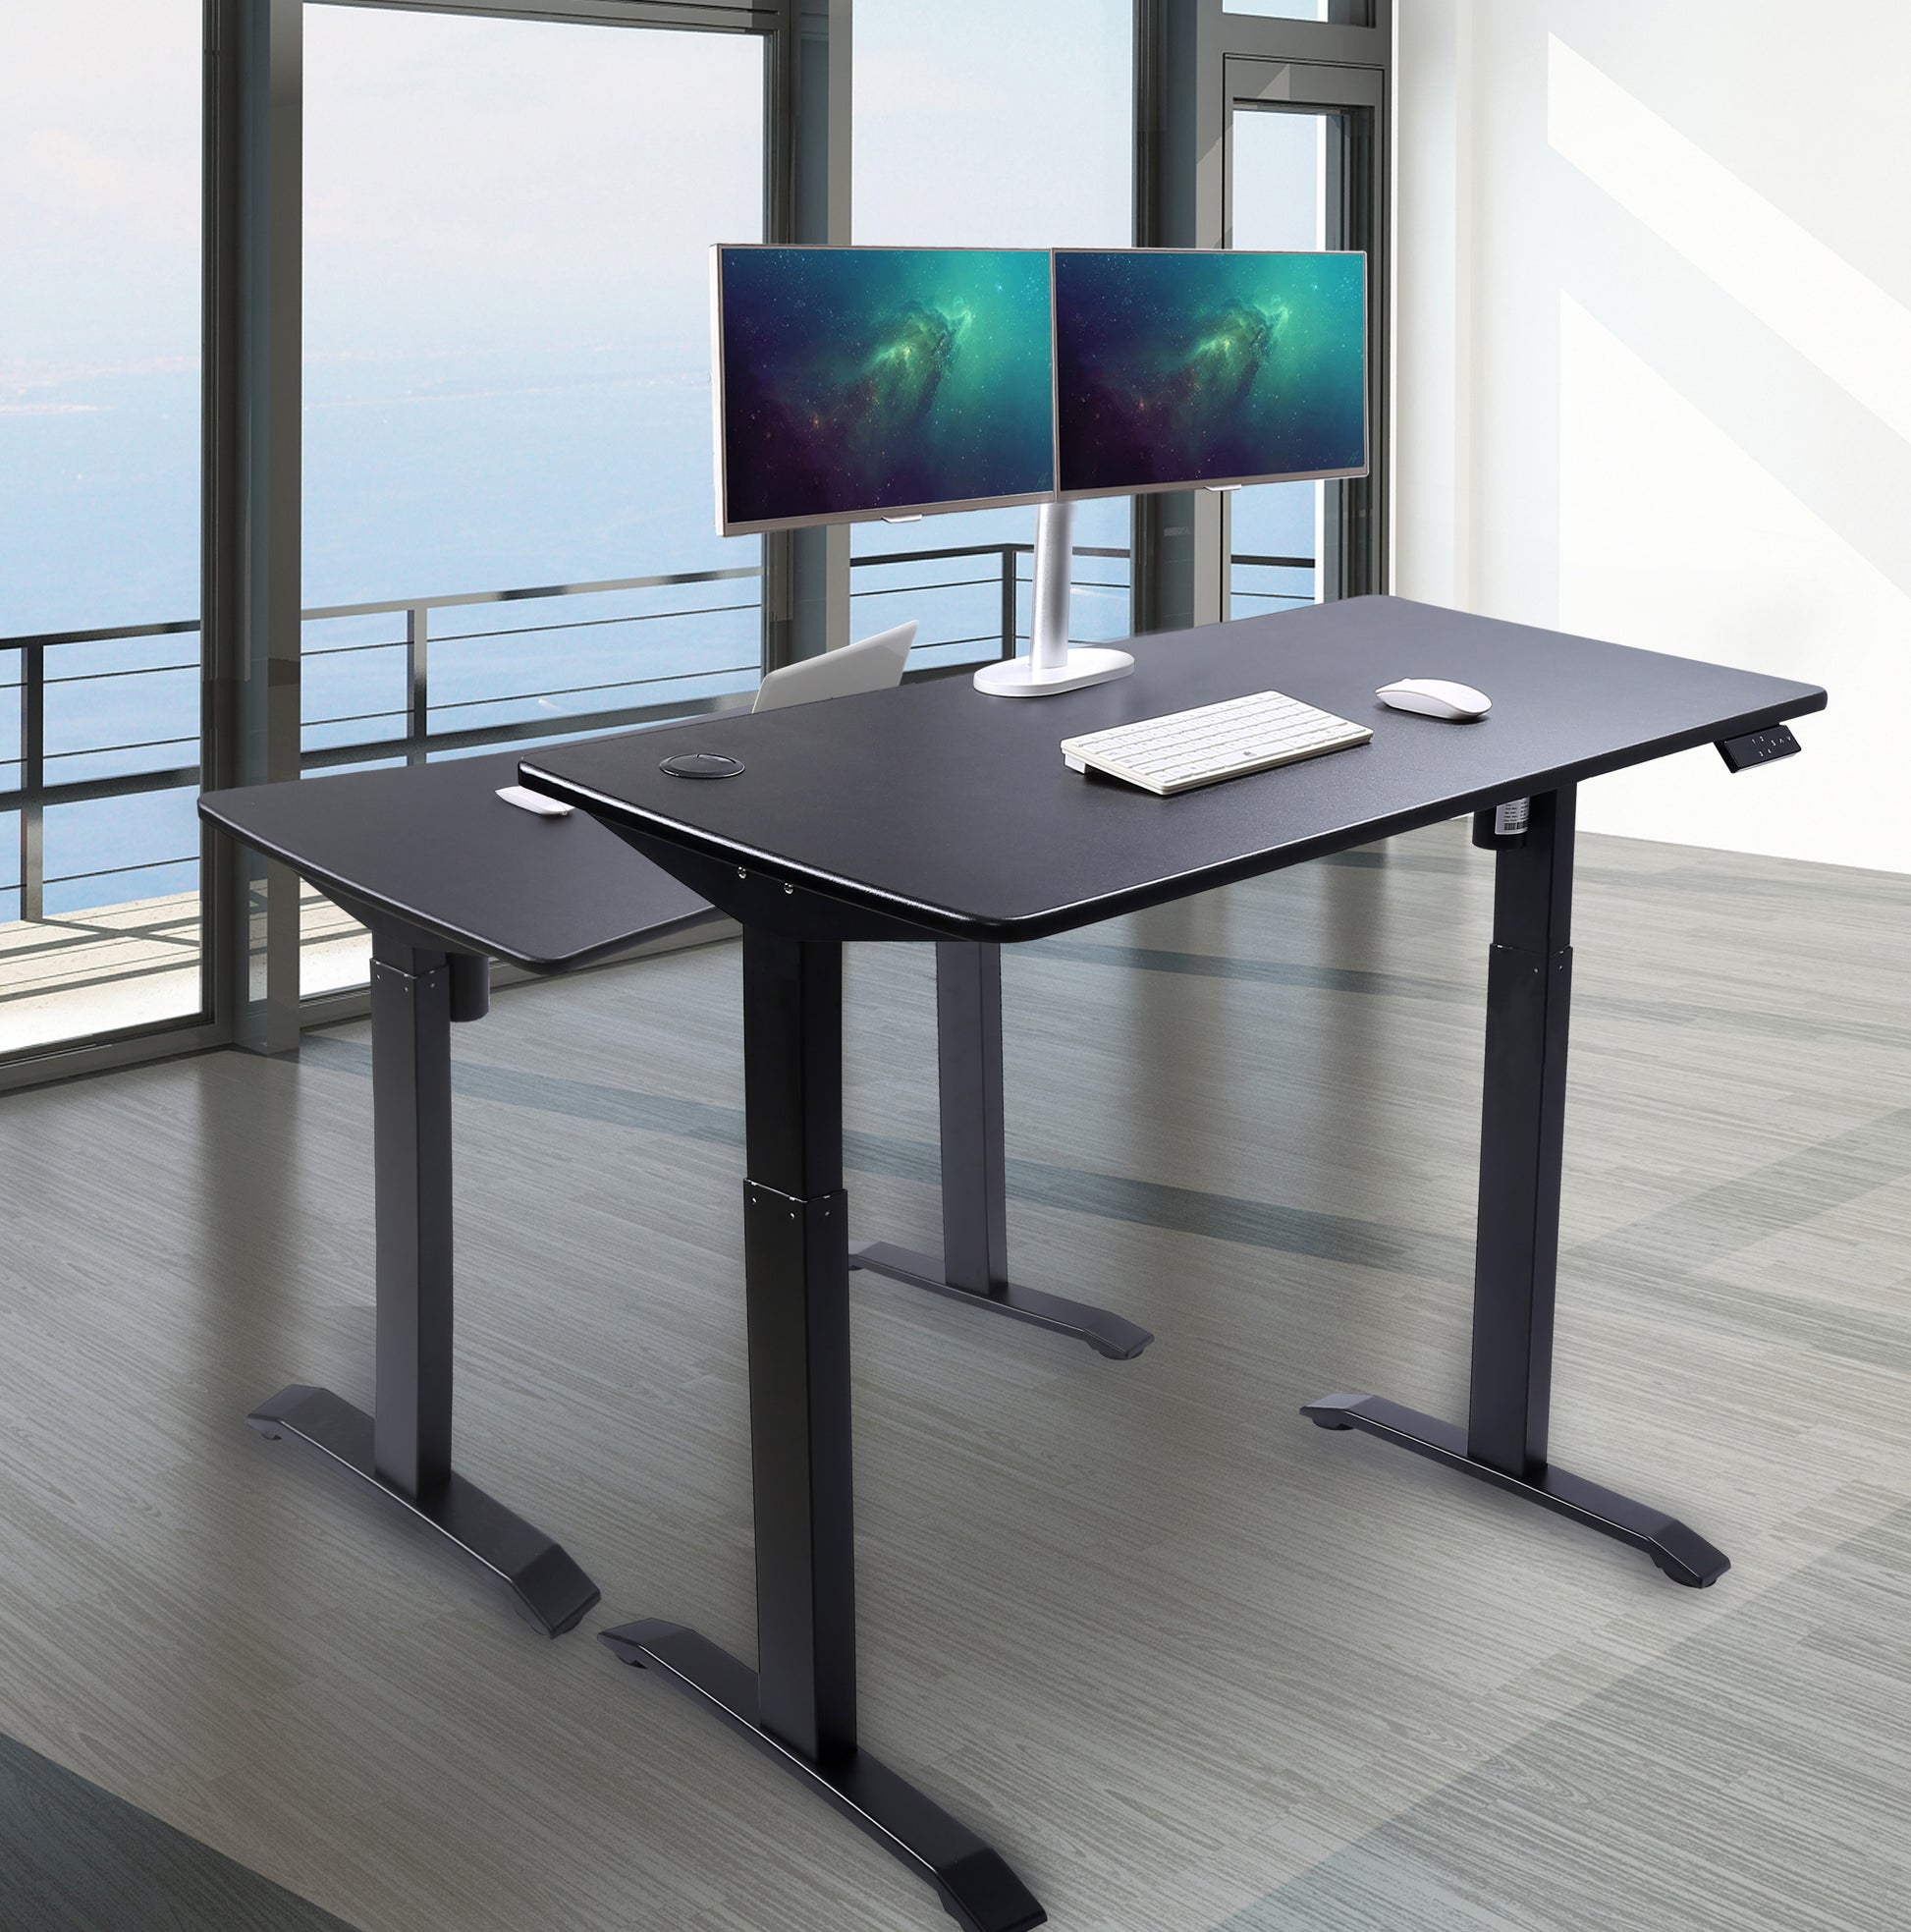 Standing Desk Accessories to Enhance Your Desktop Setup – Progressive Desk